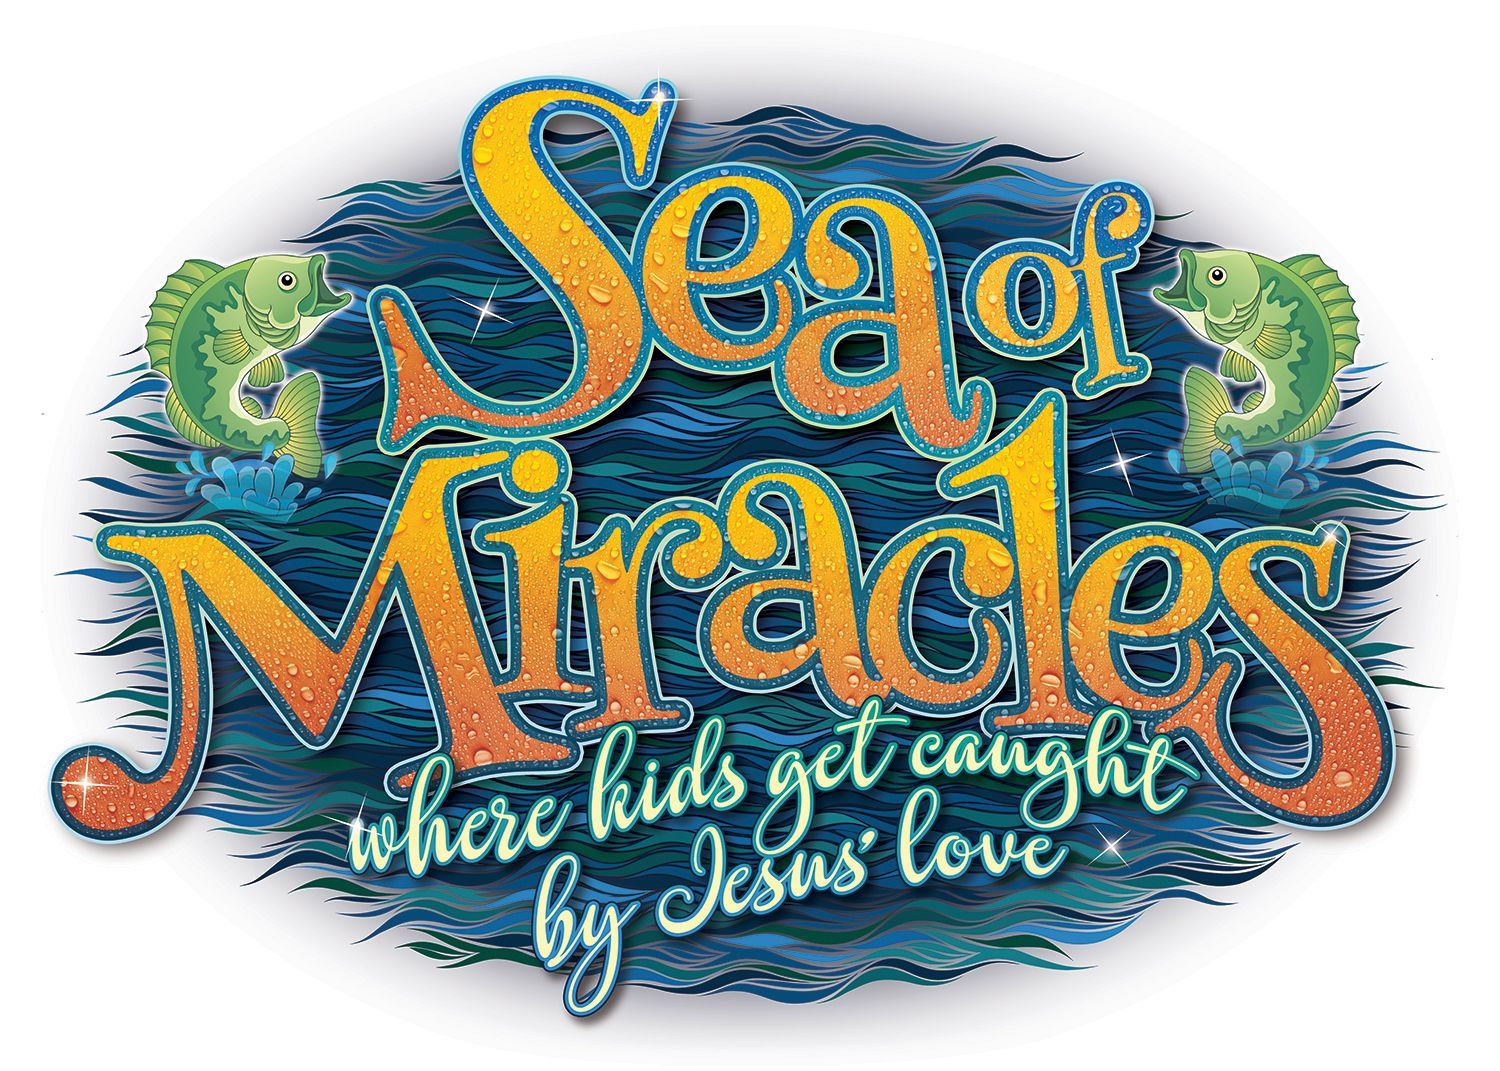 The Sea of Miracles VBX program's logo. #VBX #VBS #Adventist